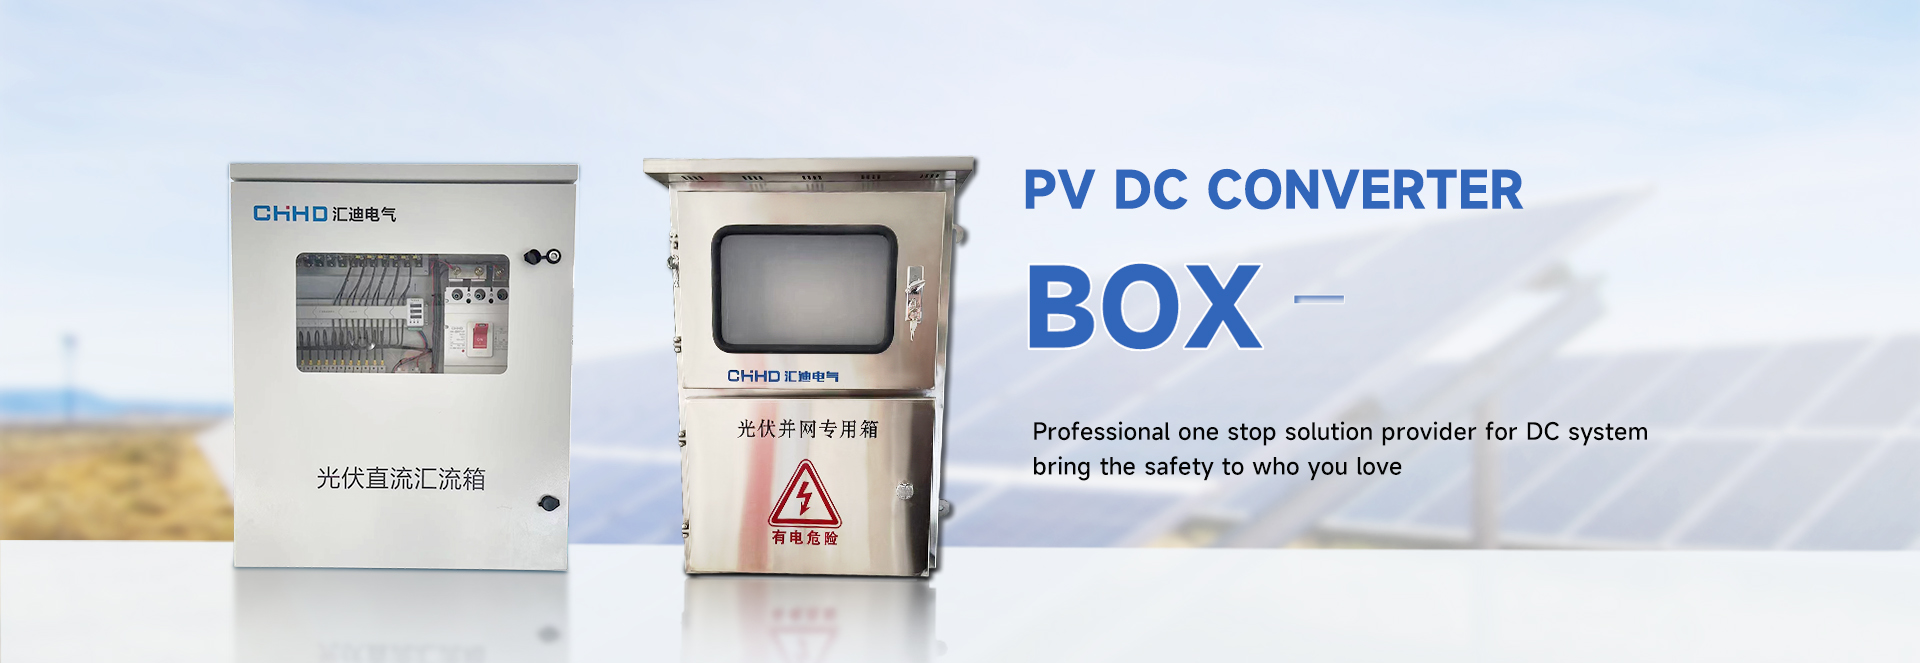 Pv Dc Converter Box 0704 